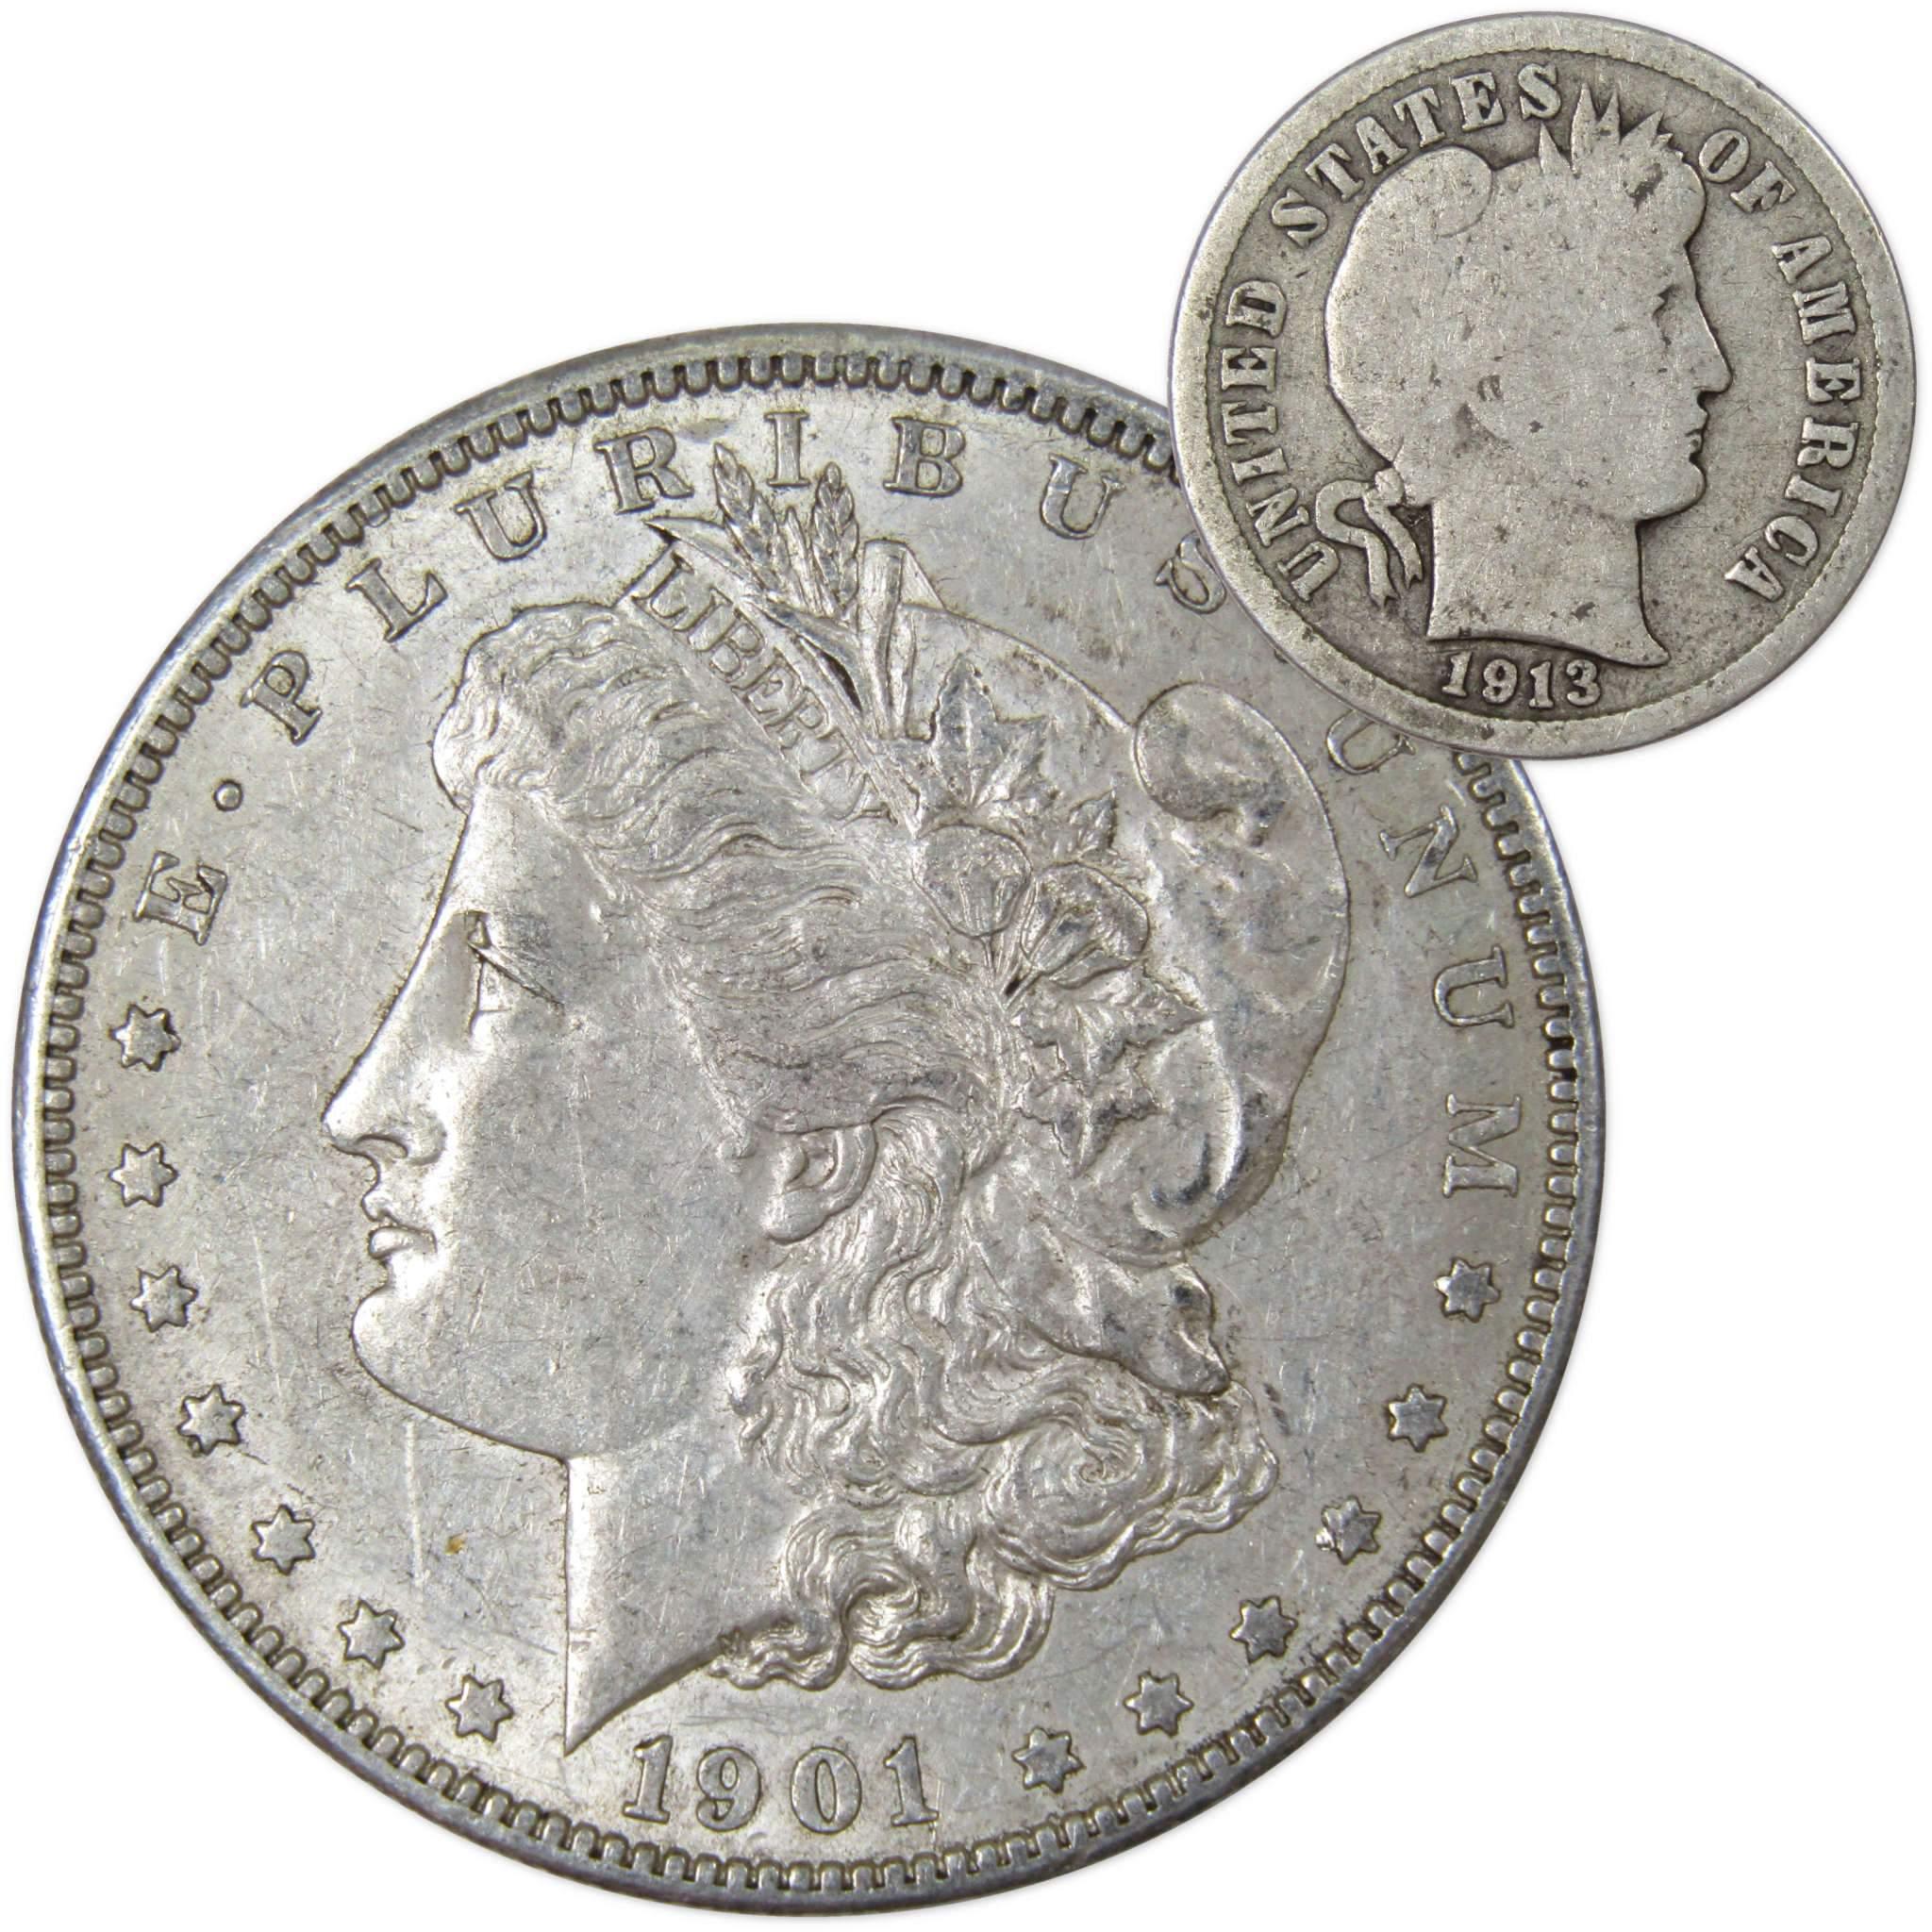 1901 O Morgan Dollar XF EF Extremely Fine with 1913 Barber Dime G Good - Morgan coin - Morgan silver dollar - Morgan silver dollar for sale - Profile Coins &amp; Collectibles